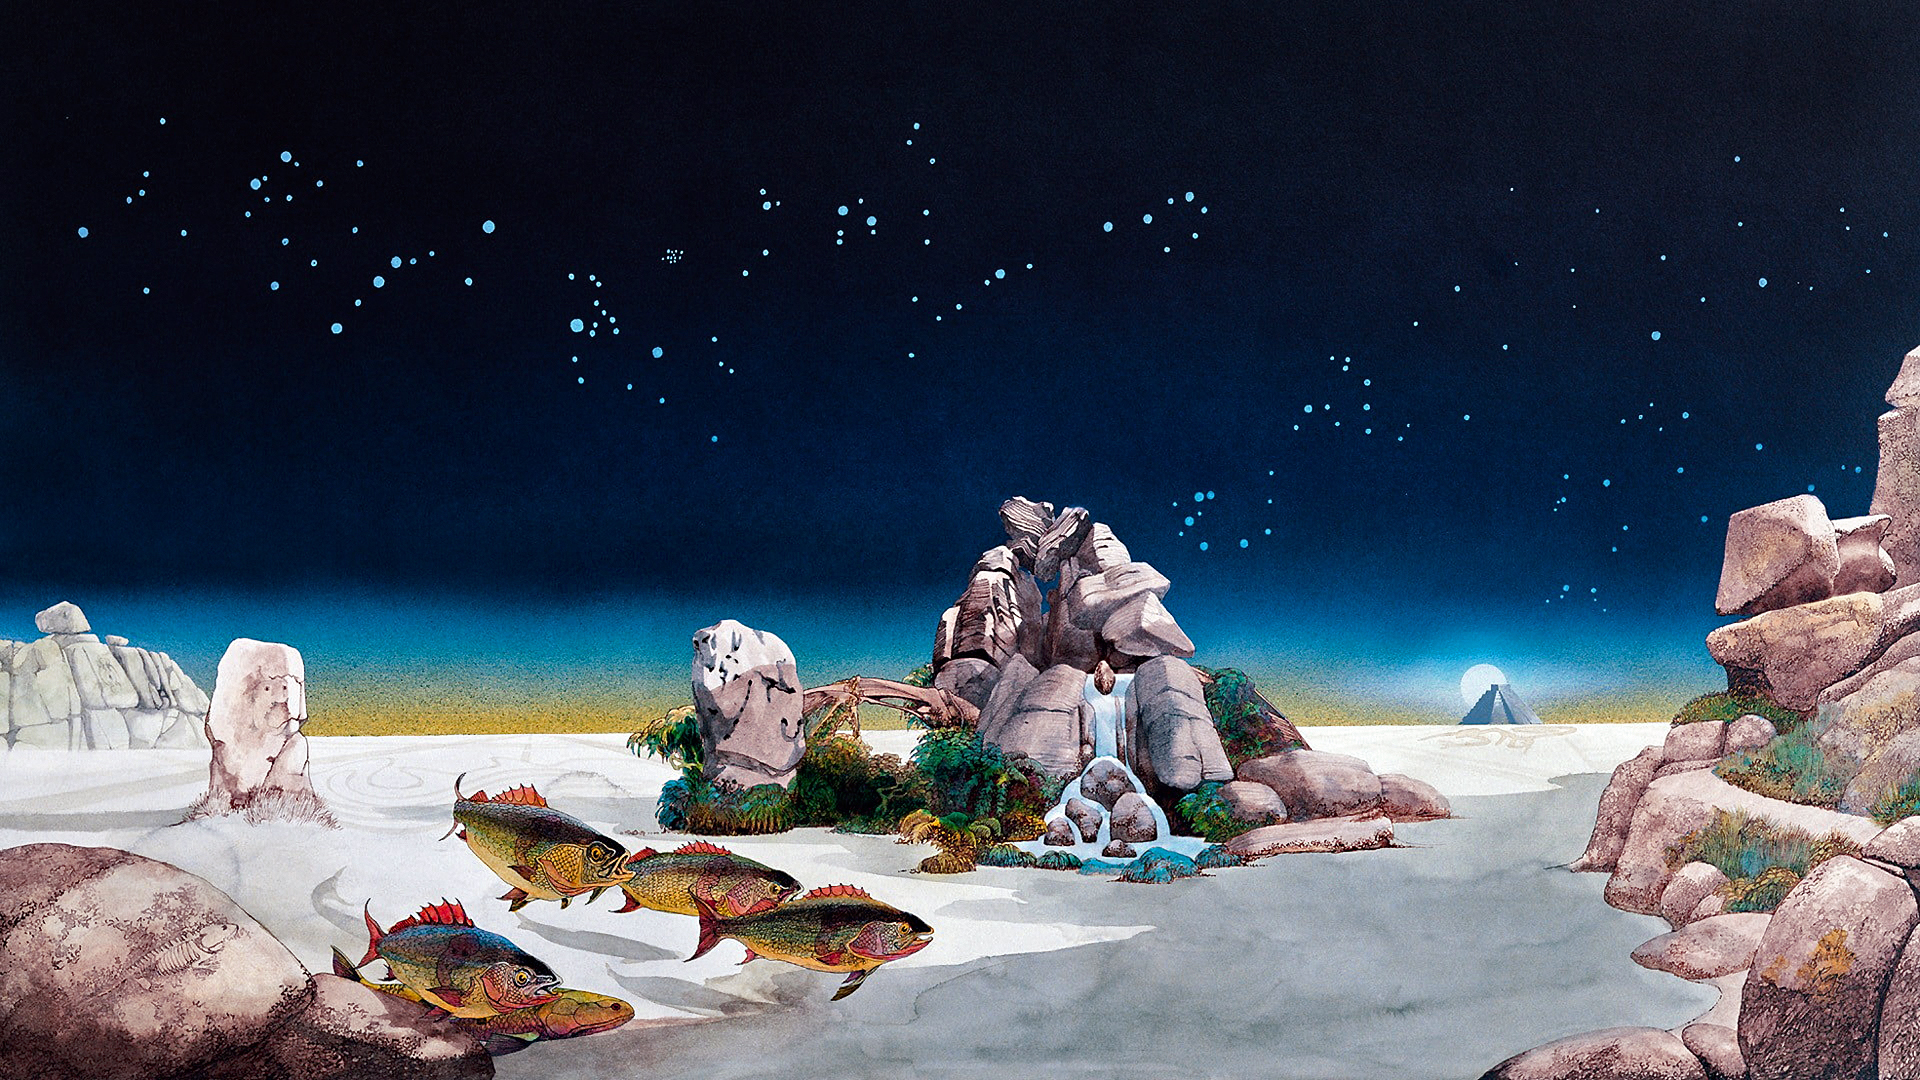 Roger Dean Yes Surreal Landscape Fish Waterfall Night Sky Artwork Cover Art Album Covers Progressive 1920x1080